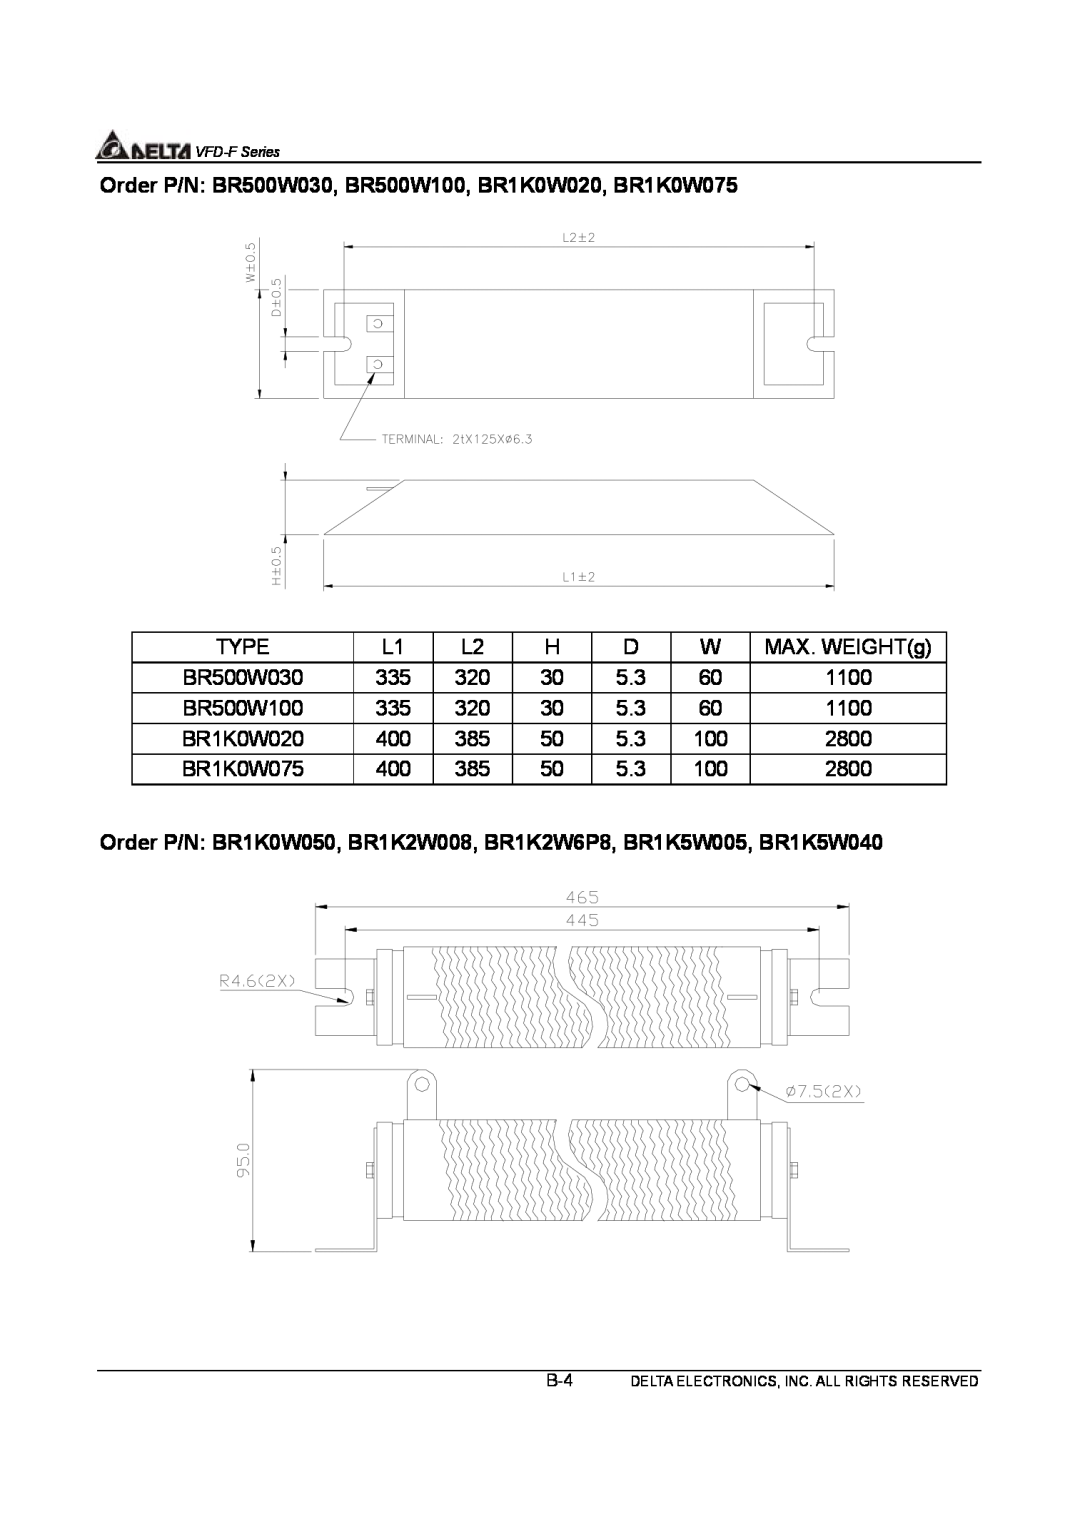 Delta Electronics VFD-F Series manual Order P/N BR500W030, BR500W100, BR1K0W020, BR1K0W075 